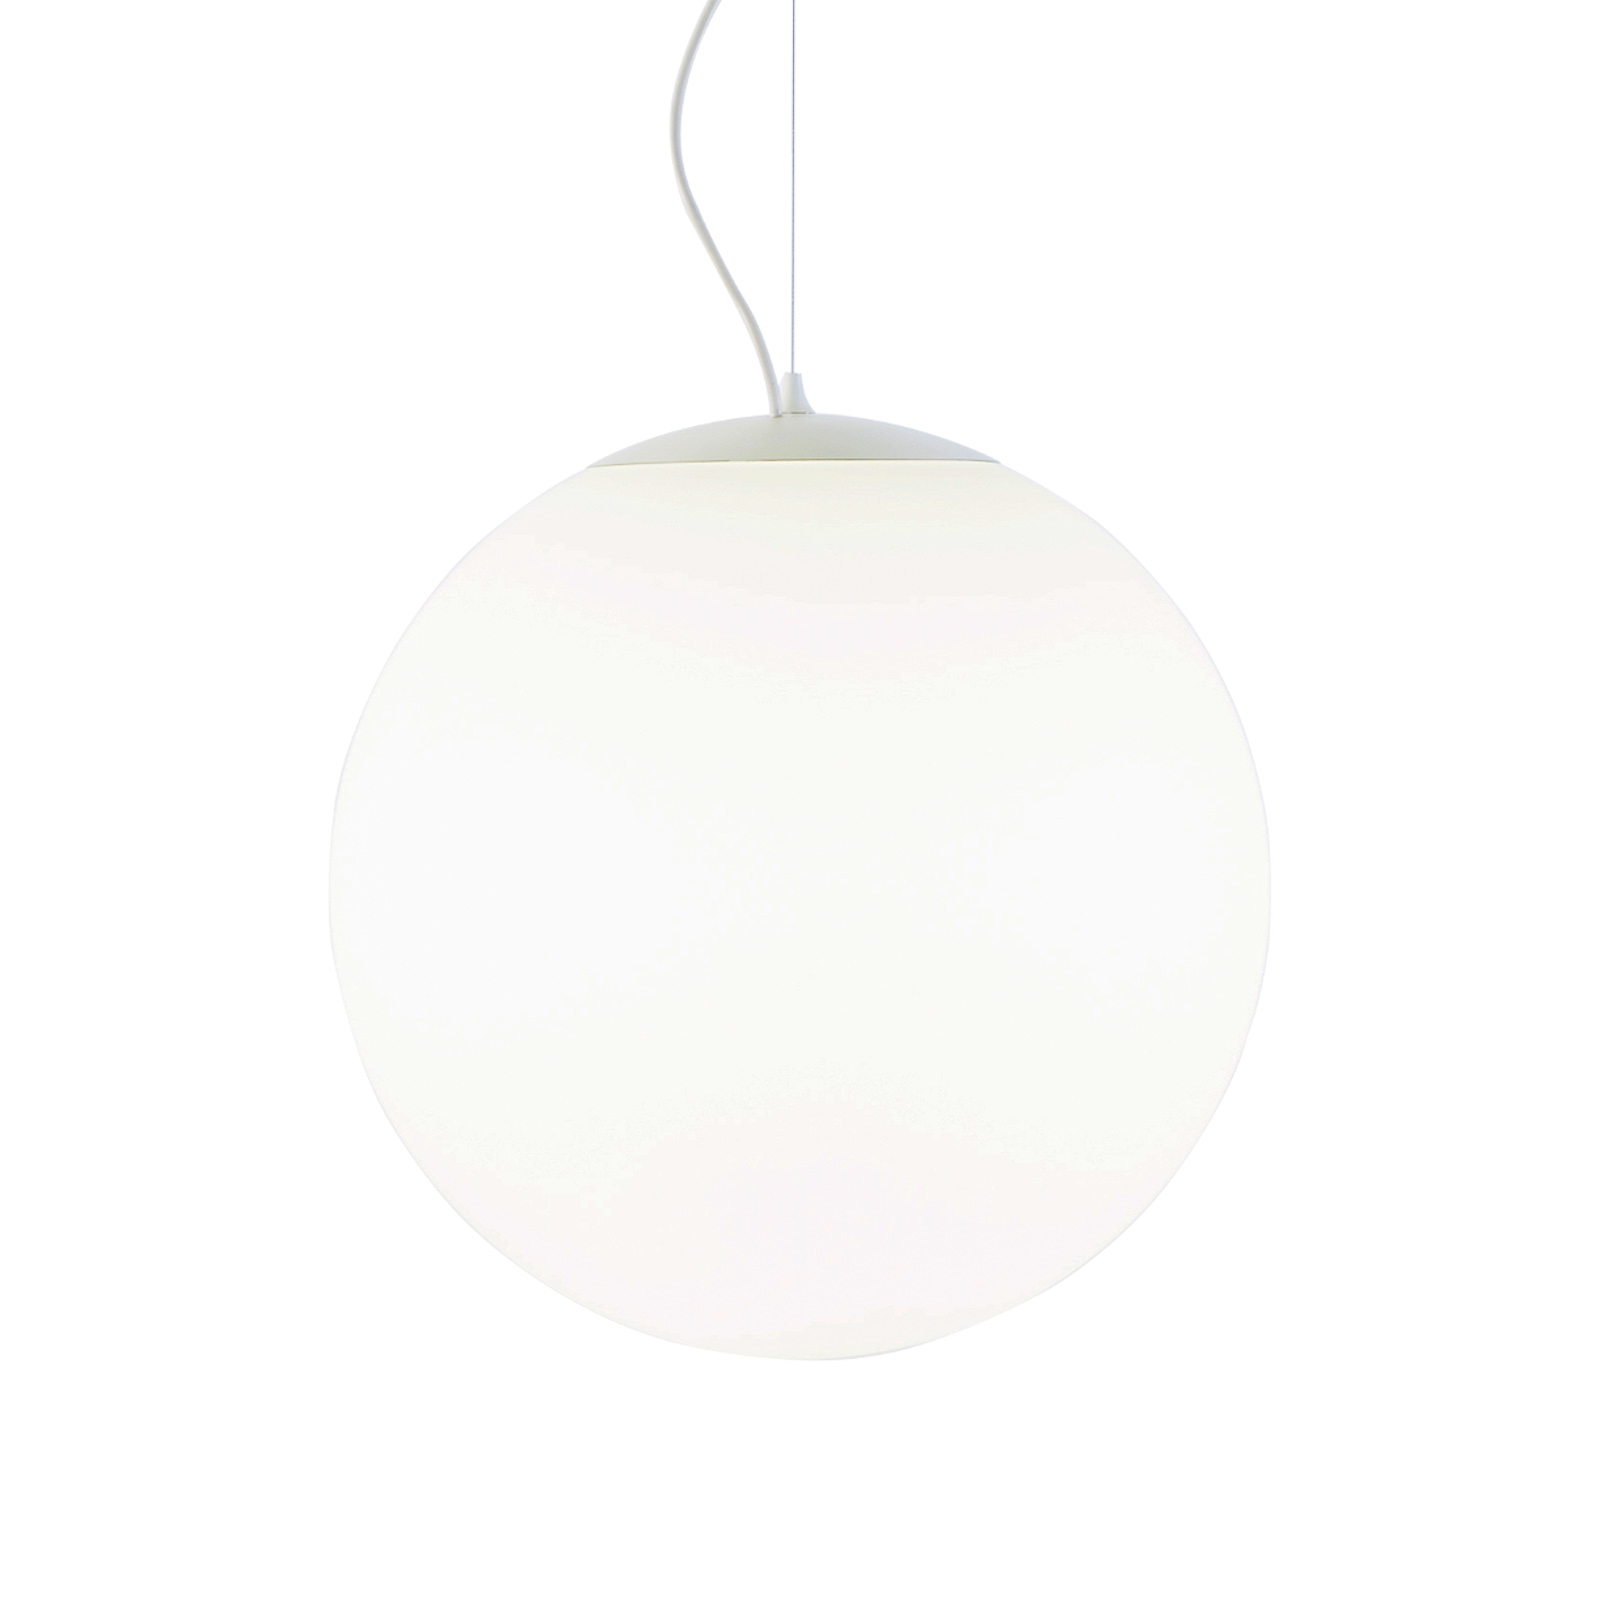 Innermost Drop hanglamp, wit, Ø 40 cm